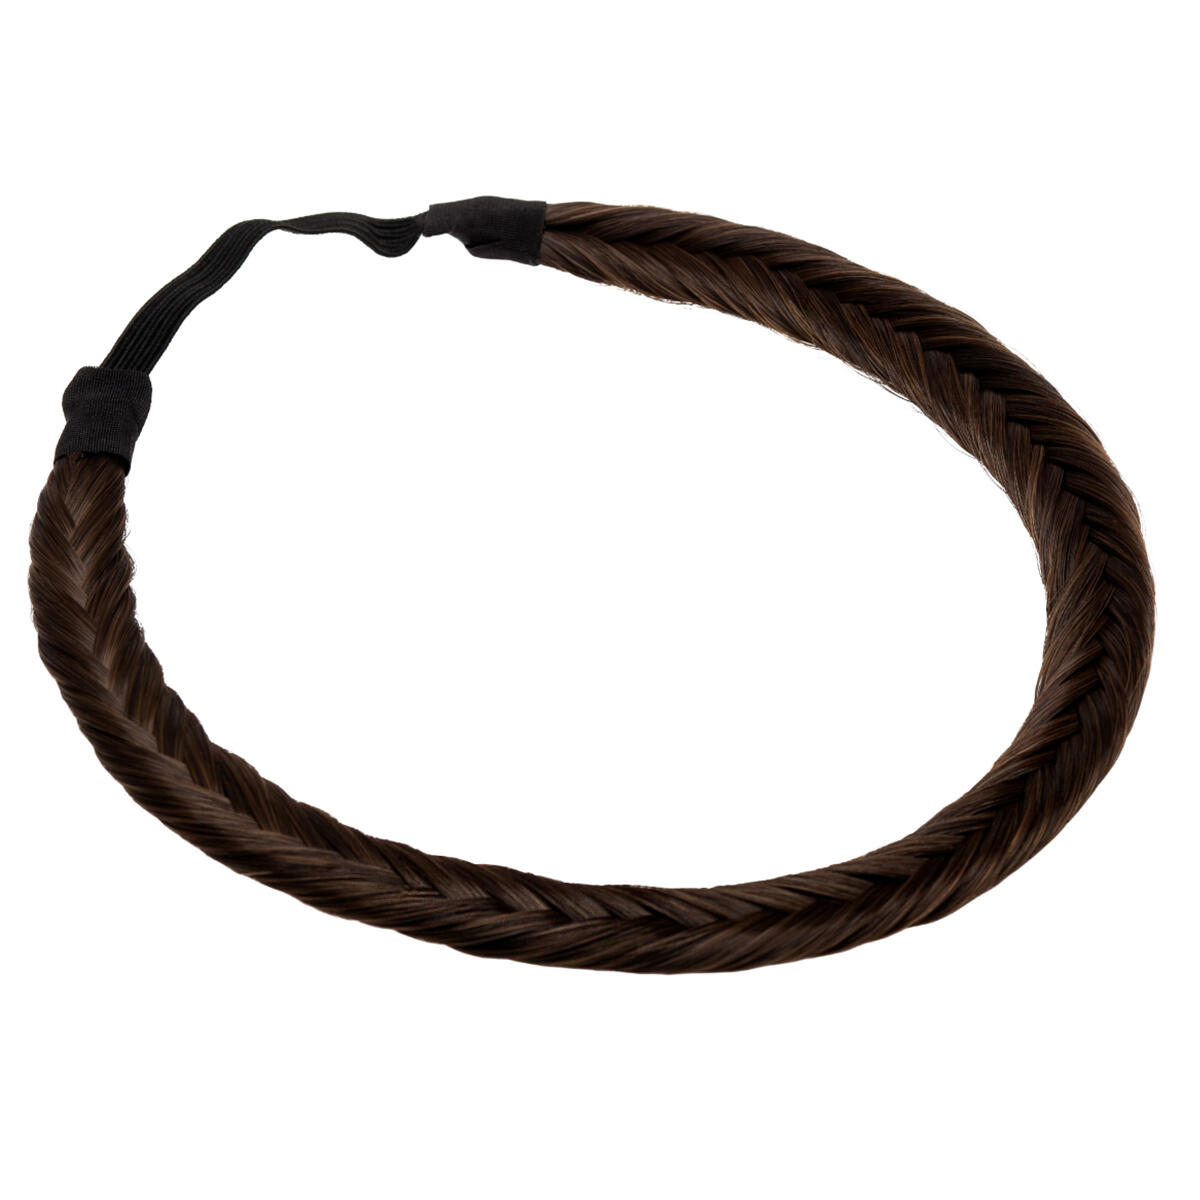 Synthetic Braided Headband 2.2 Coffee Brown 0 cm